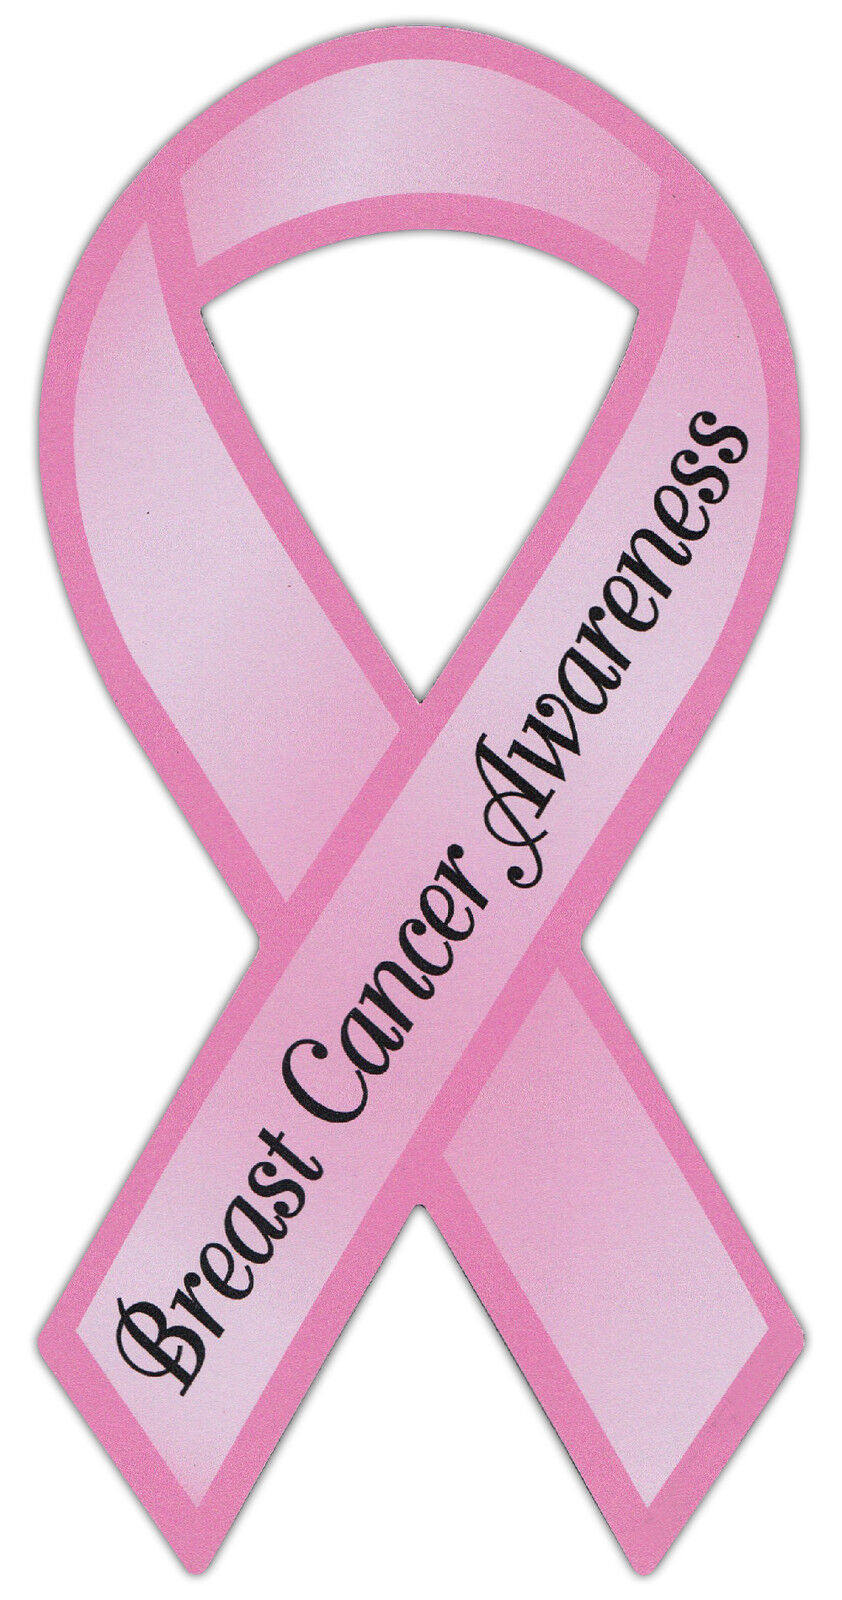 Ribbon Awareness Magnet - Breast Cancer (Pink) - Cars Trucks Refrigerator